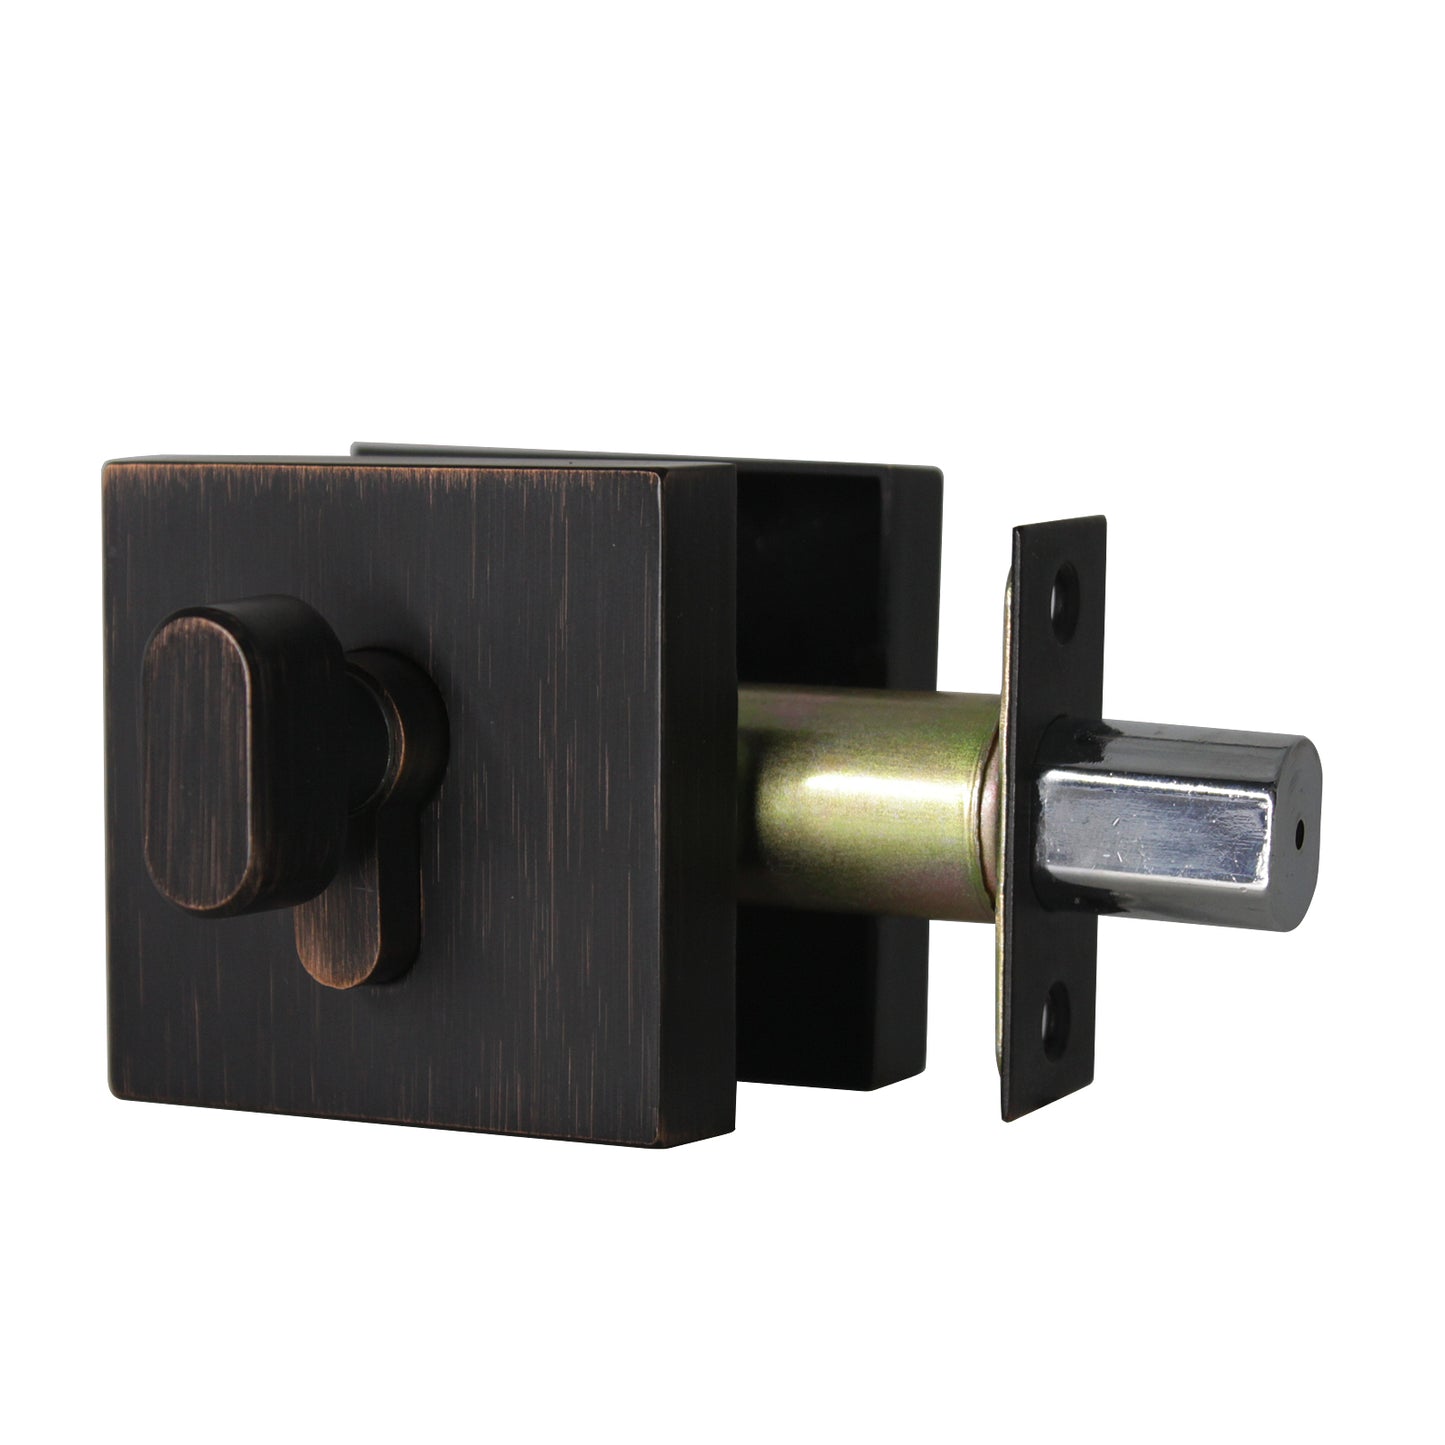 Square Design Door Deadbolt with Single Cylinder Lock Oil Rubbed Bronze Finish DLD105ORB - Probrico